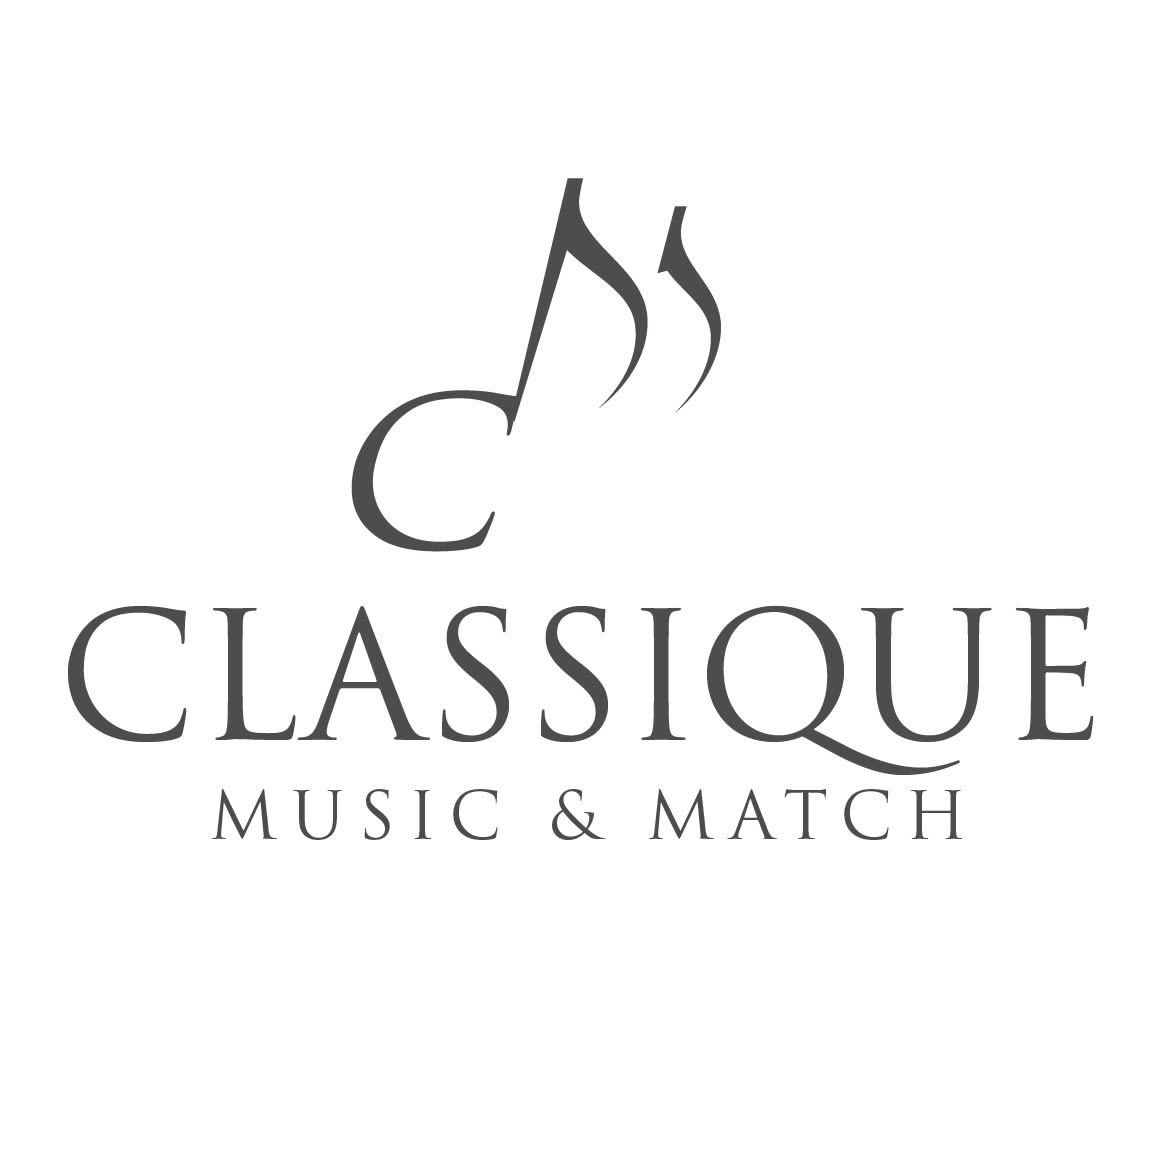 Classique Music & Match